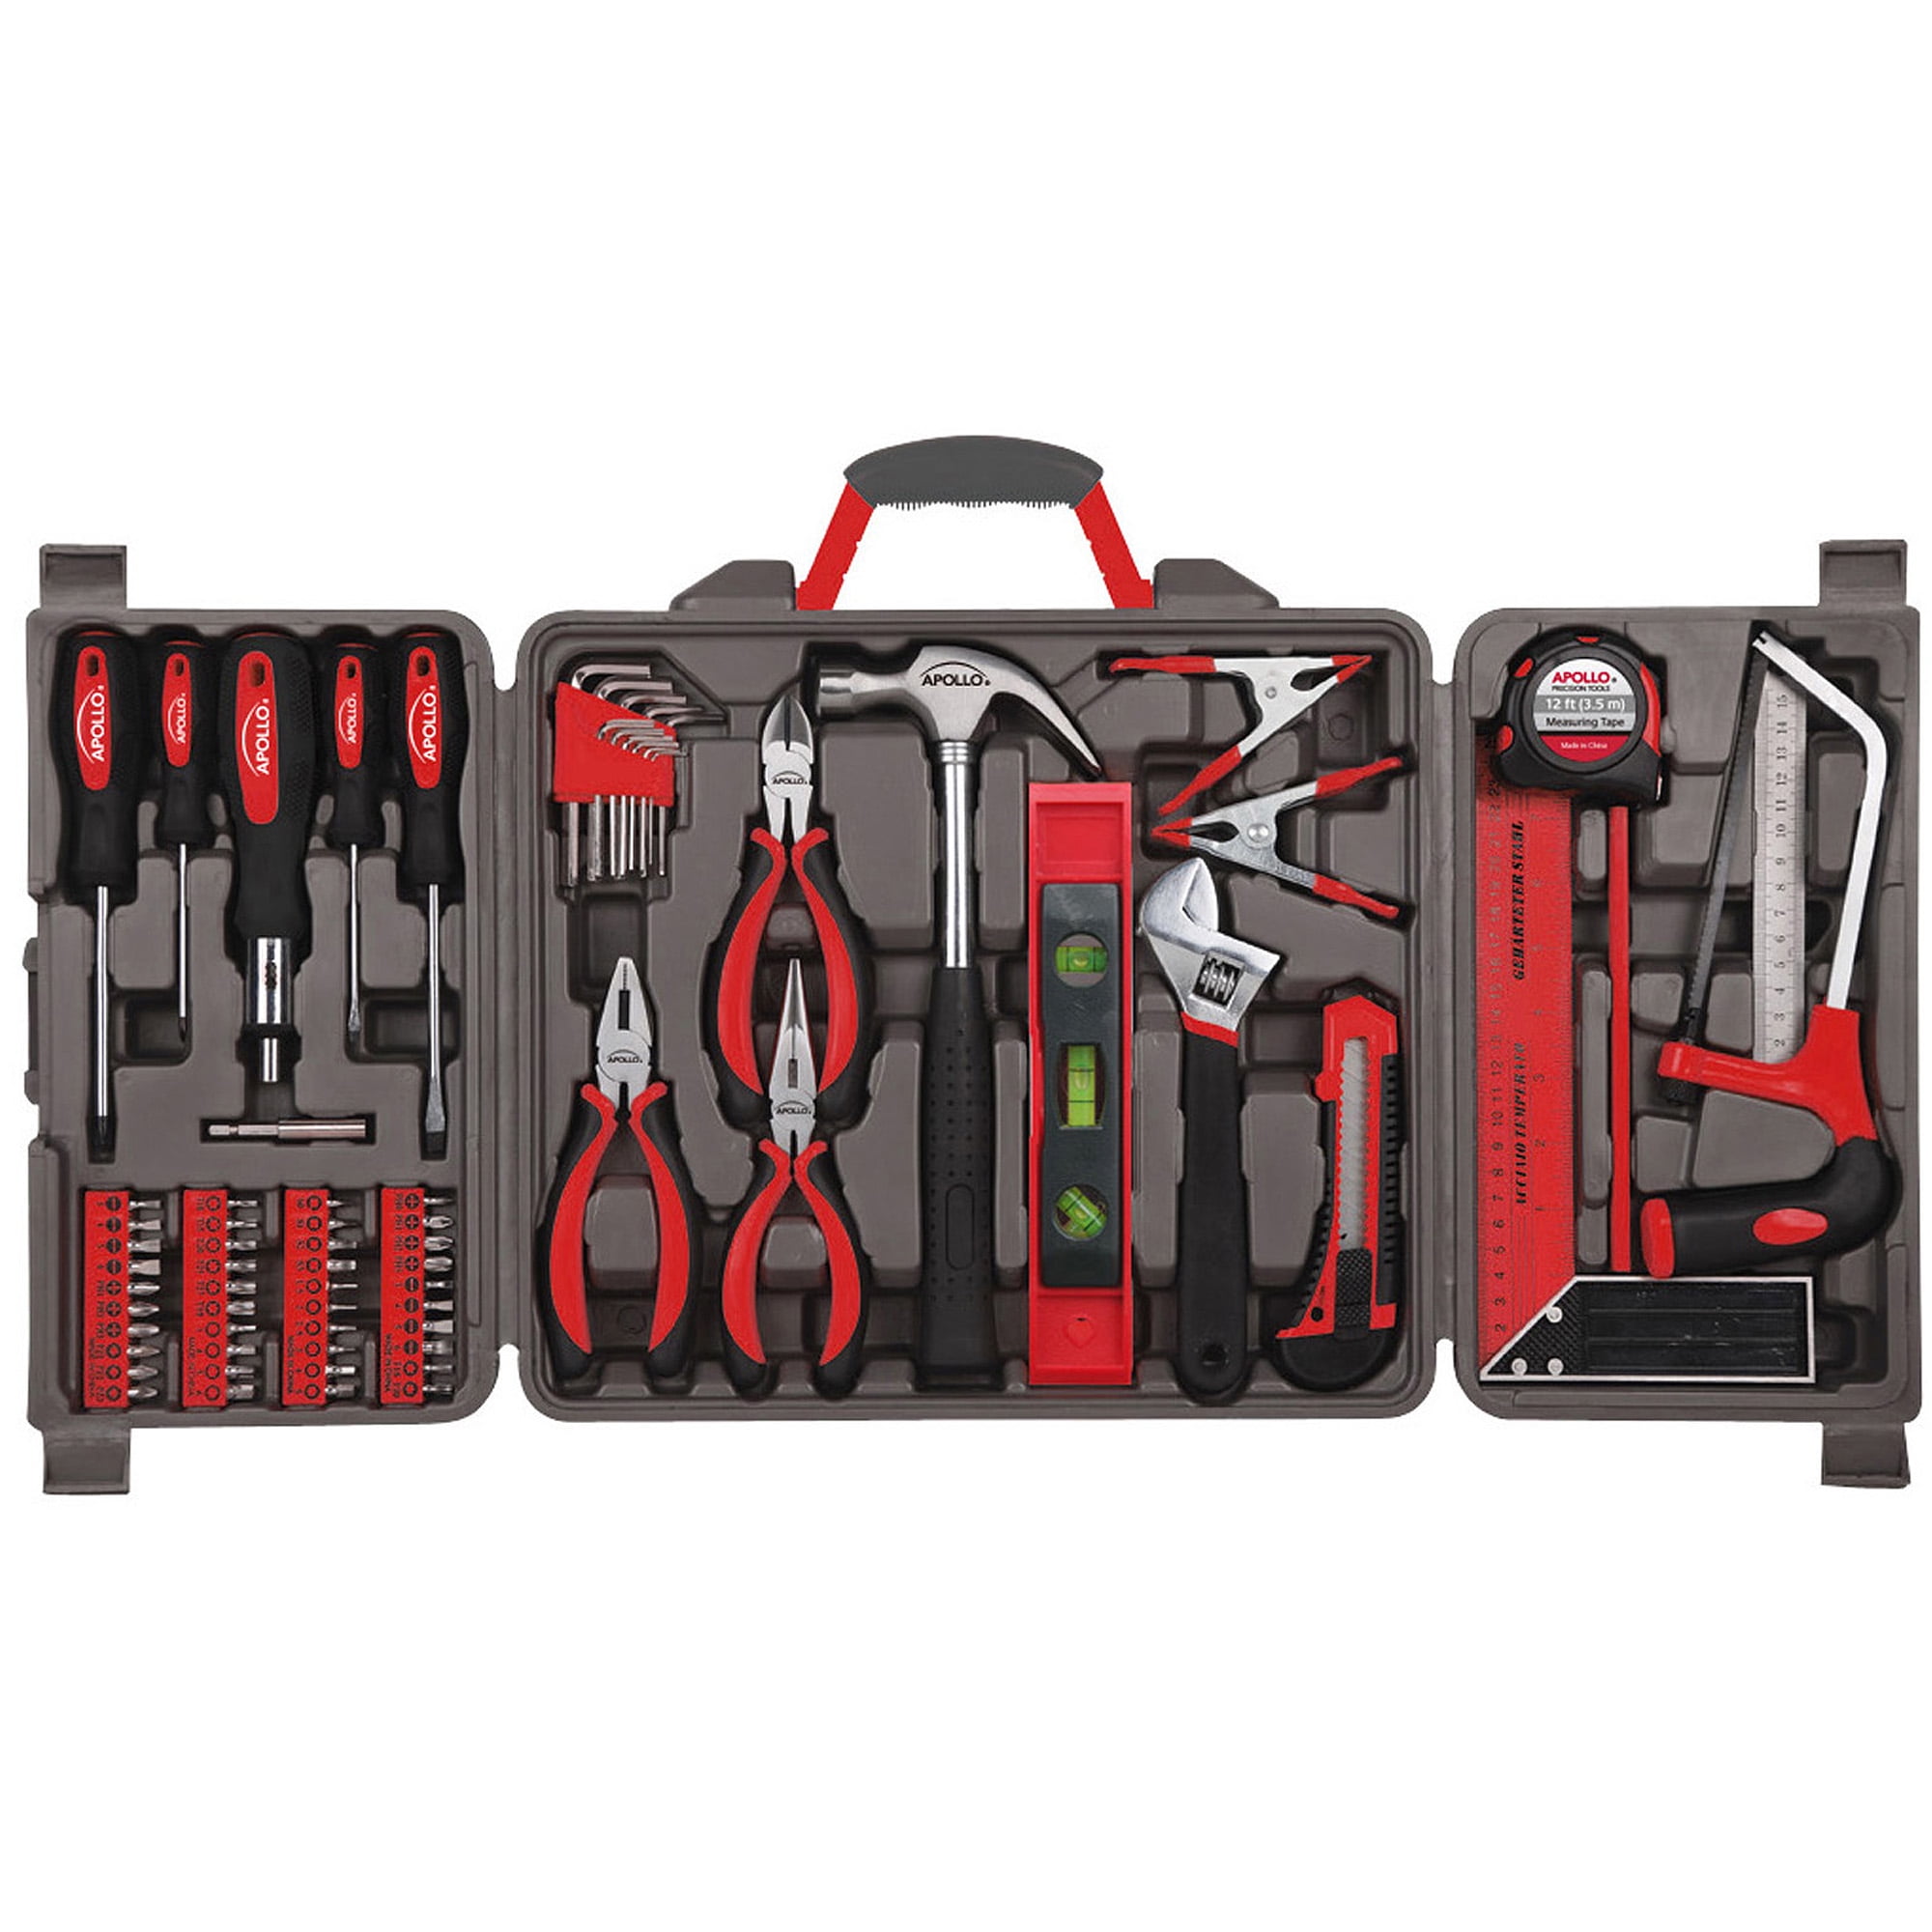 Klein Tools 6-Piece Apprentice Electrician Tool Set (94126) 94126